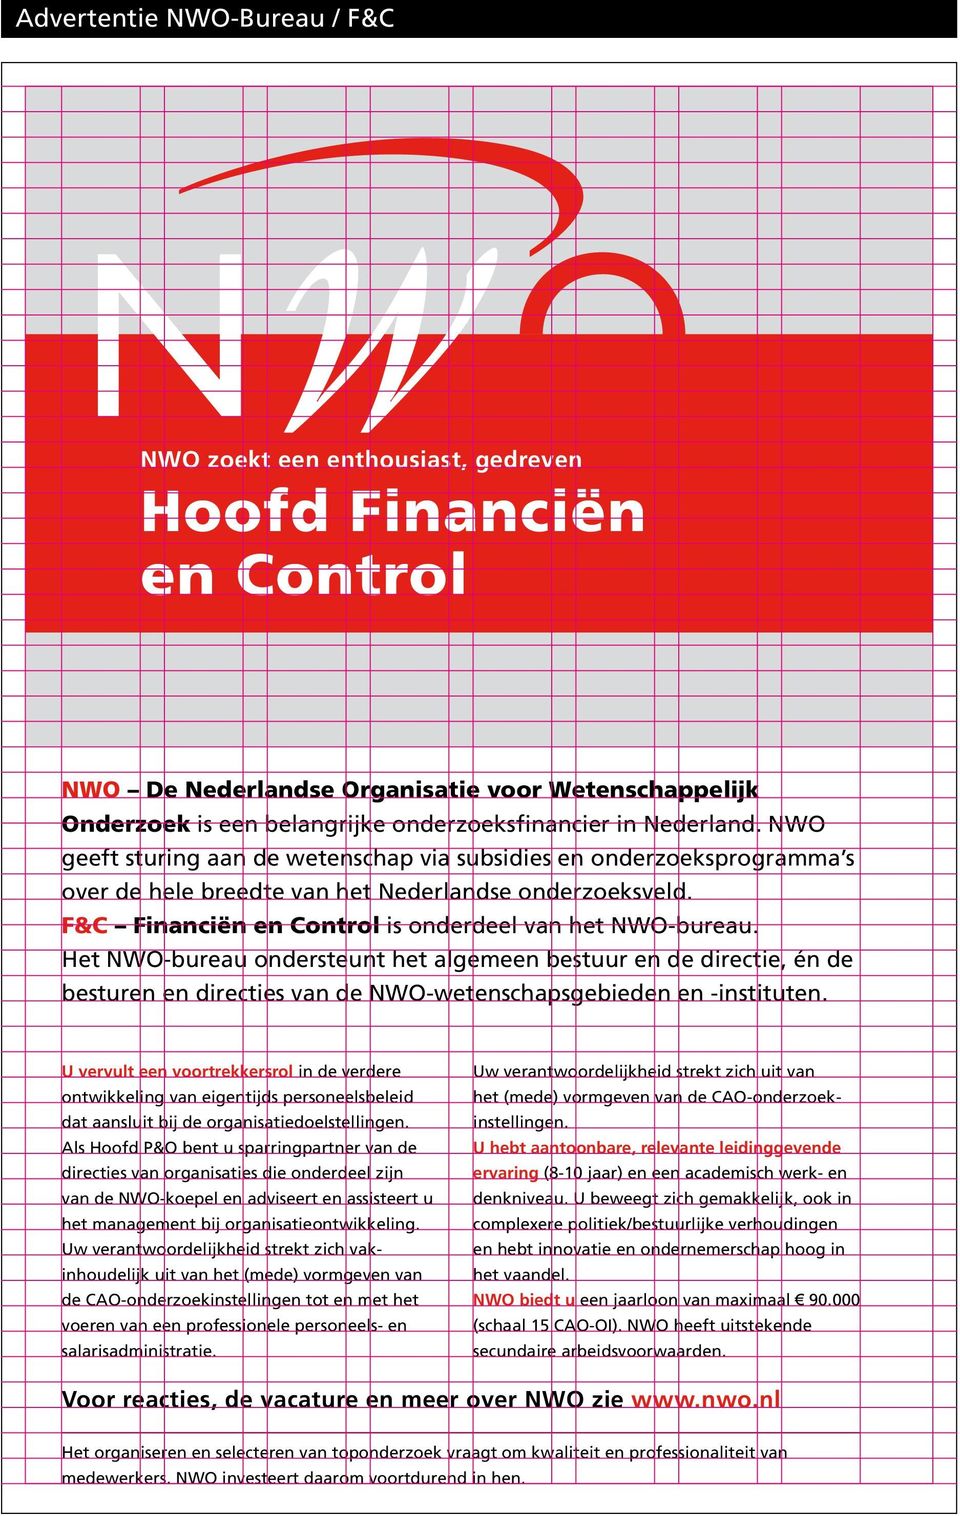 F&C Financiën en Control is